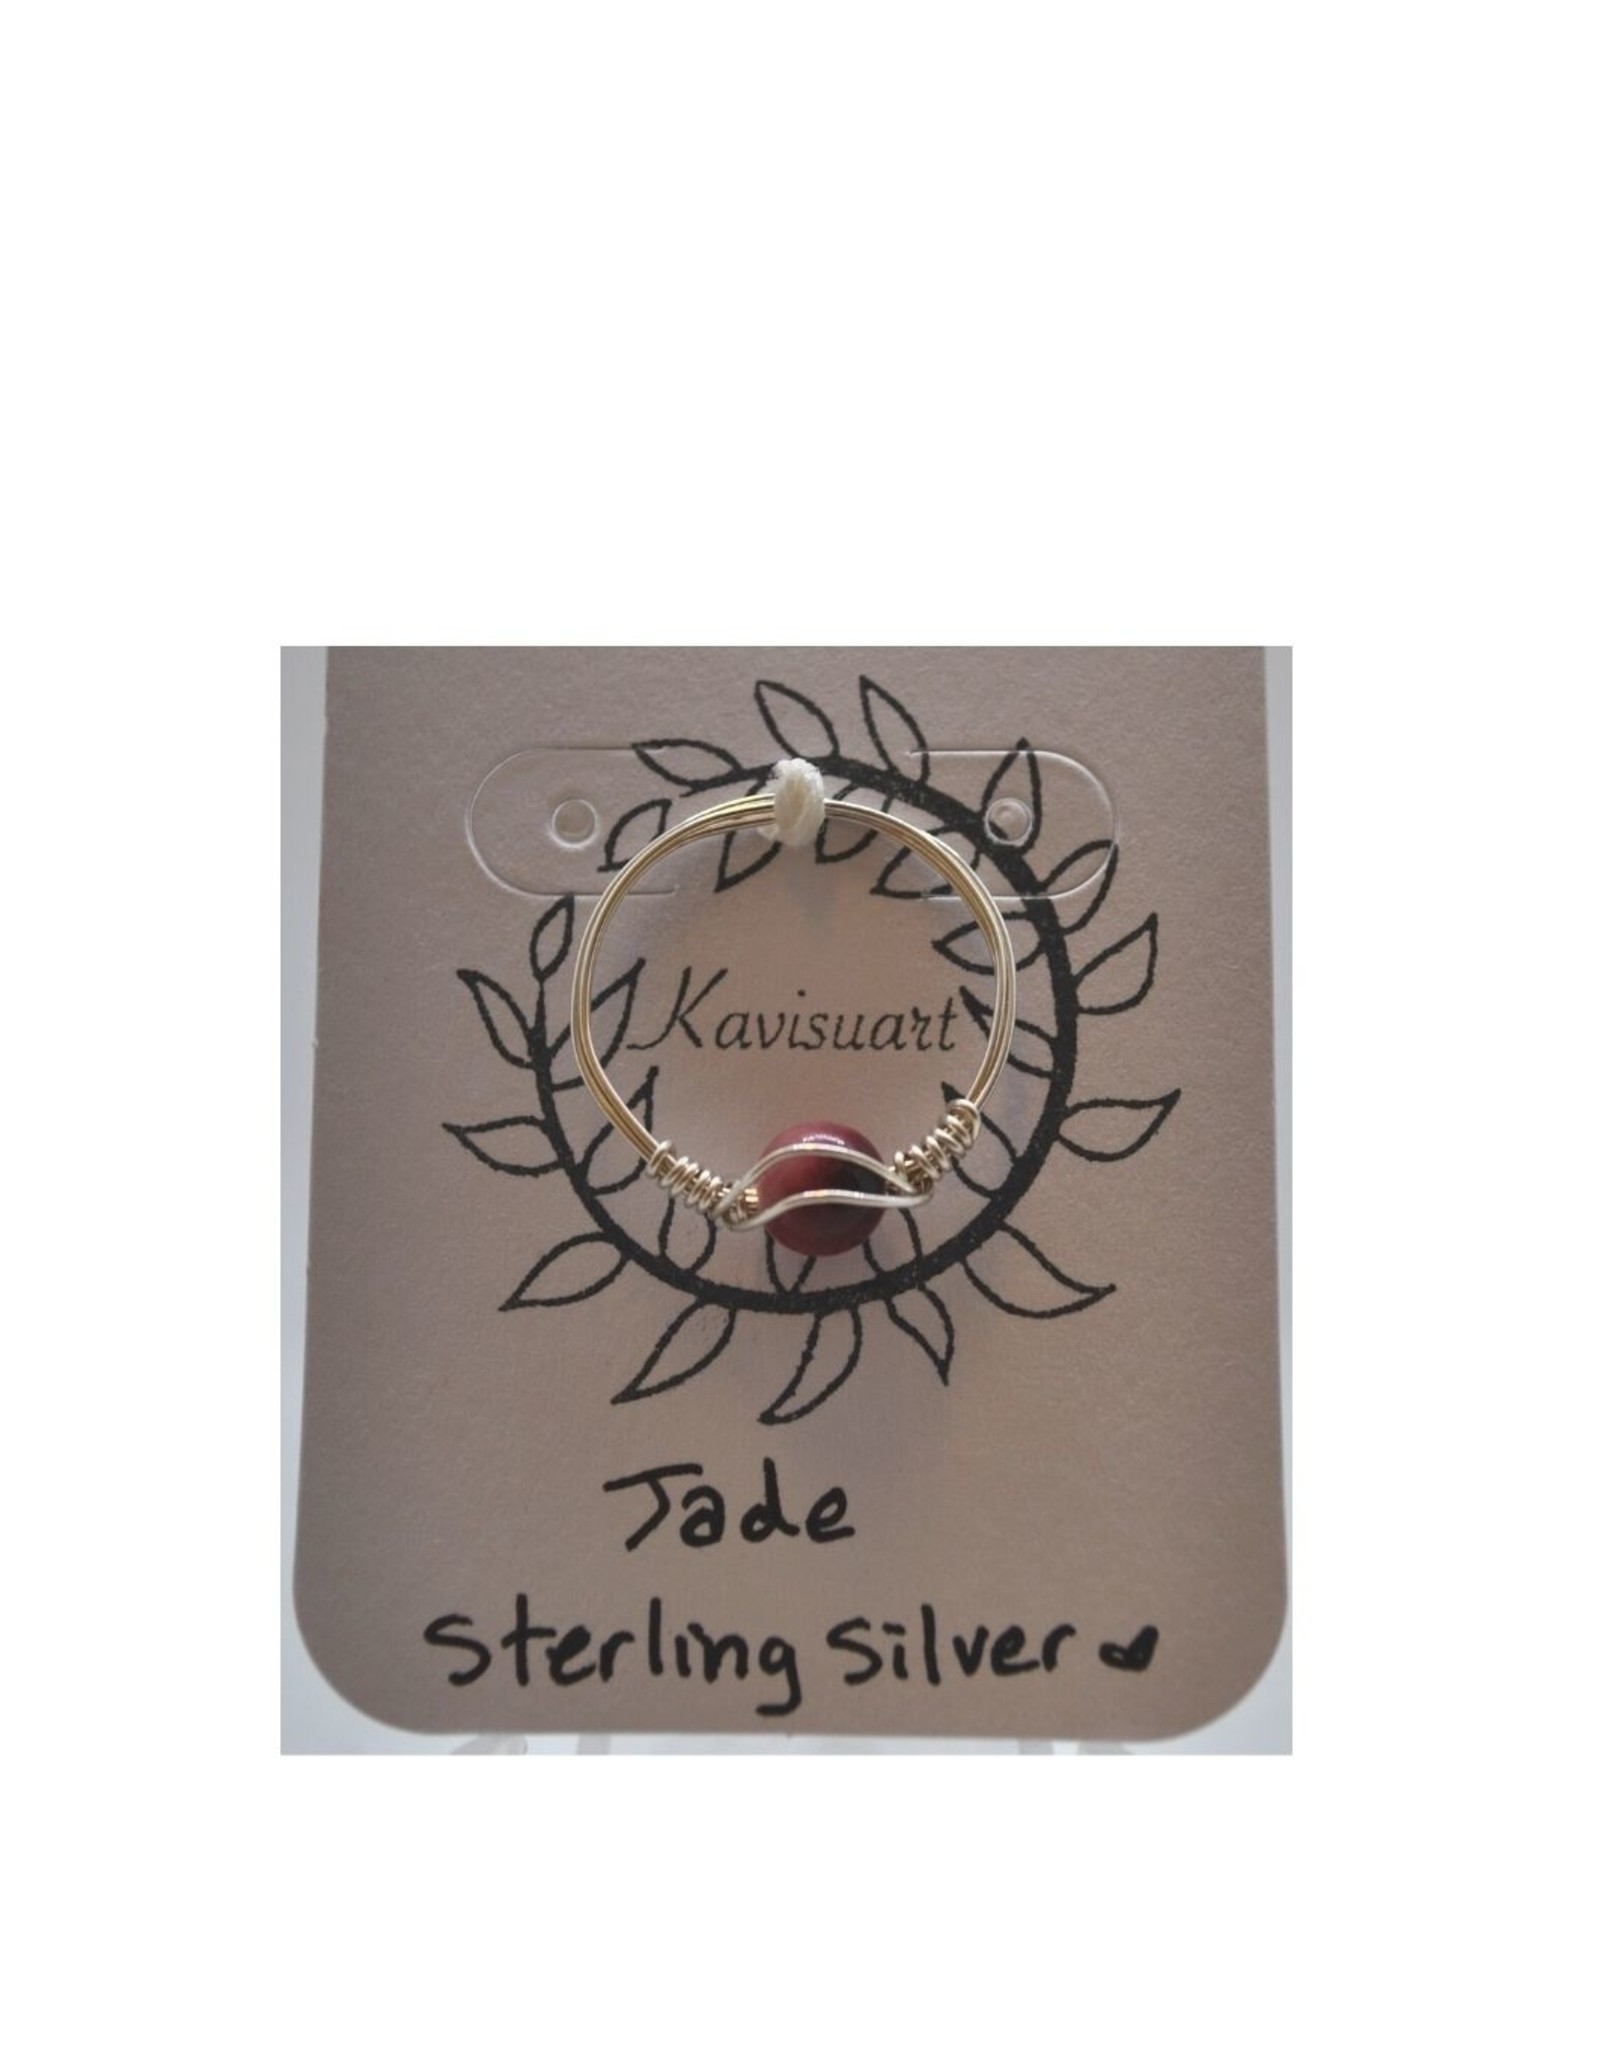 Kavisuart Jade Sterling Silver ring - size 8